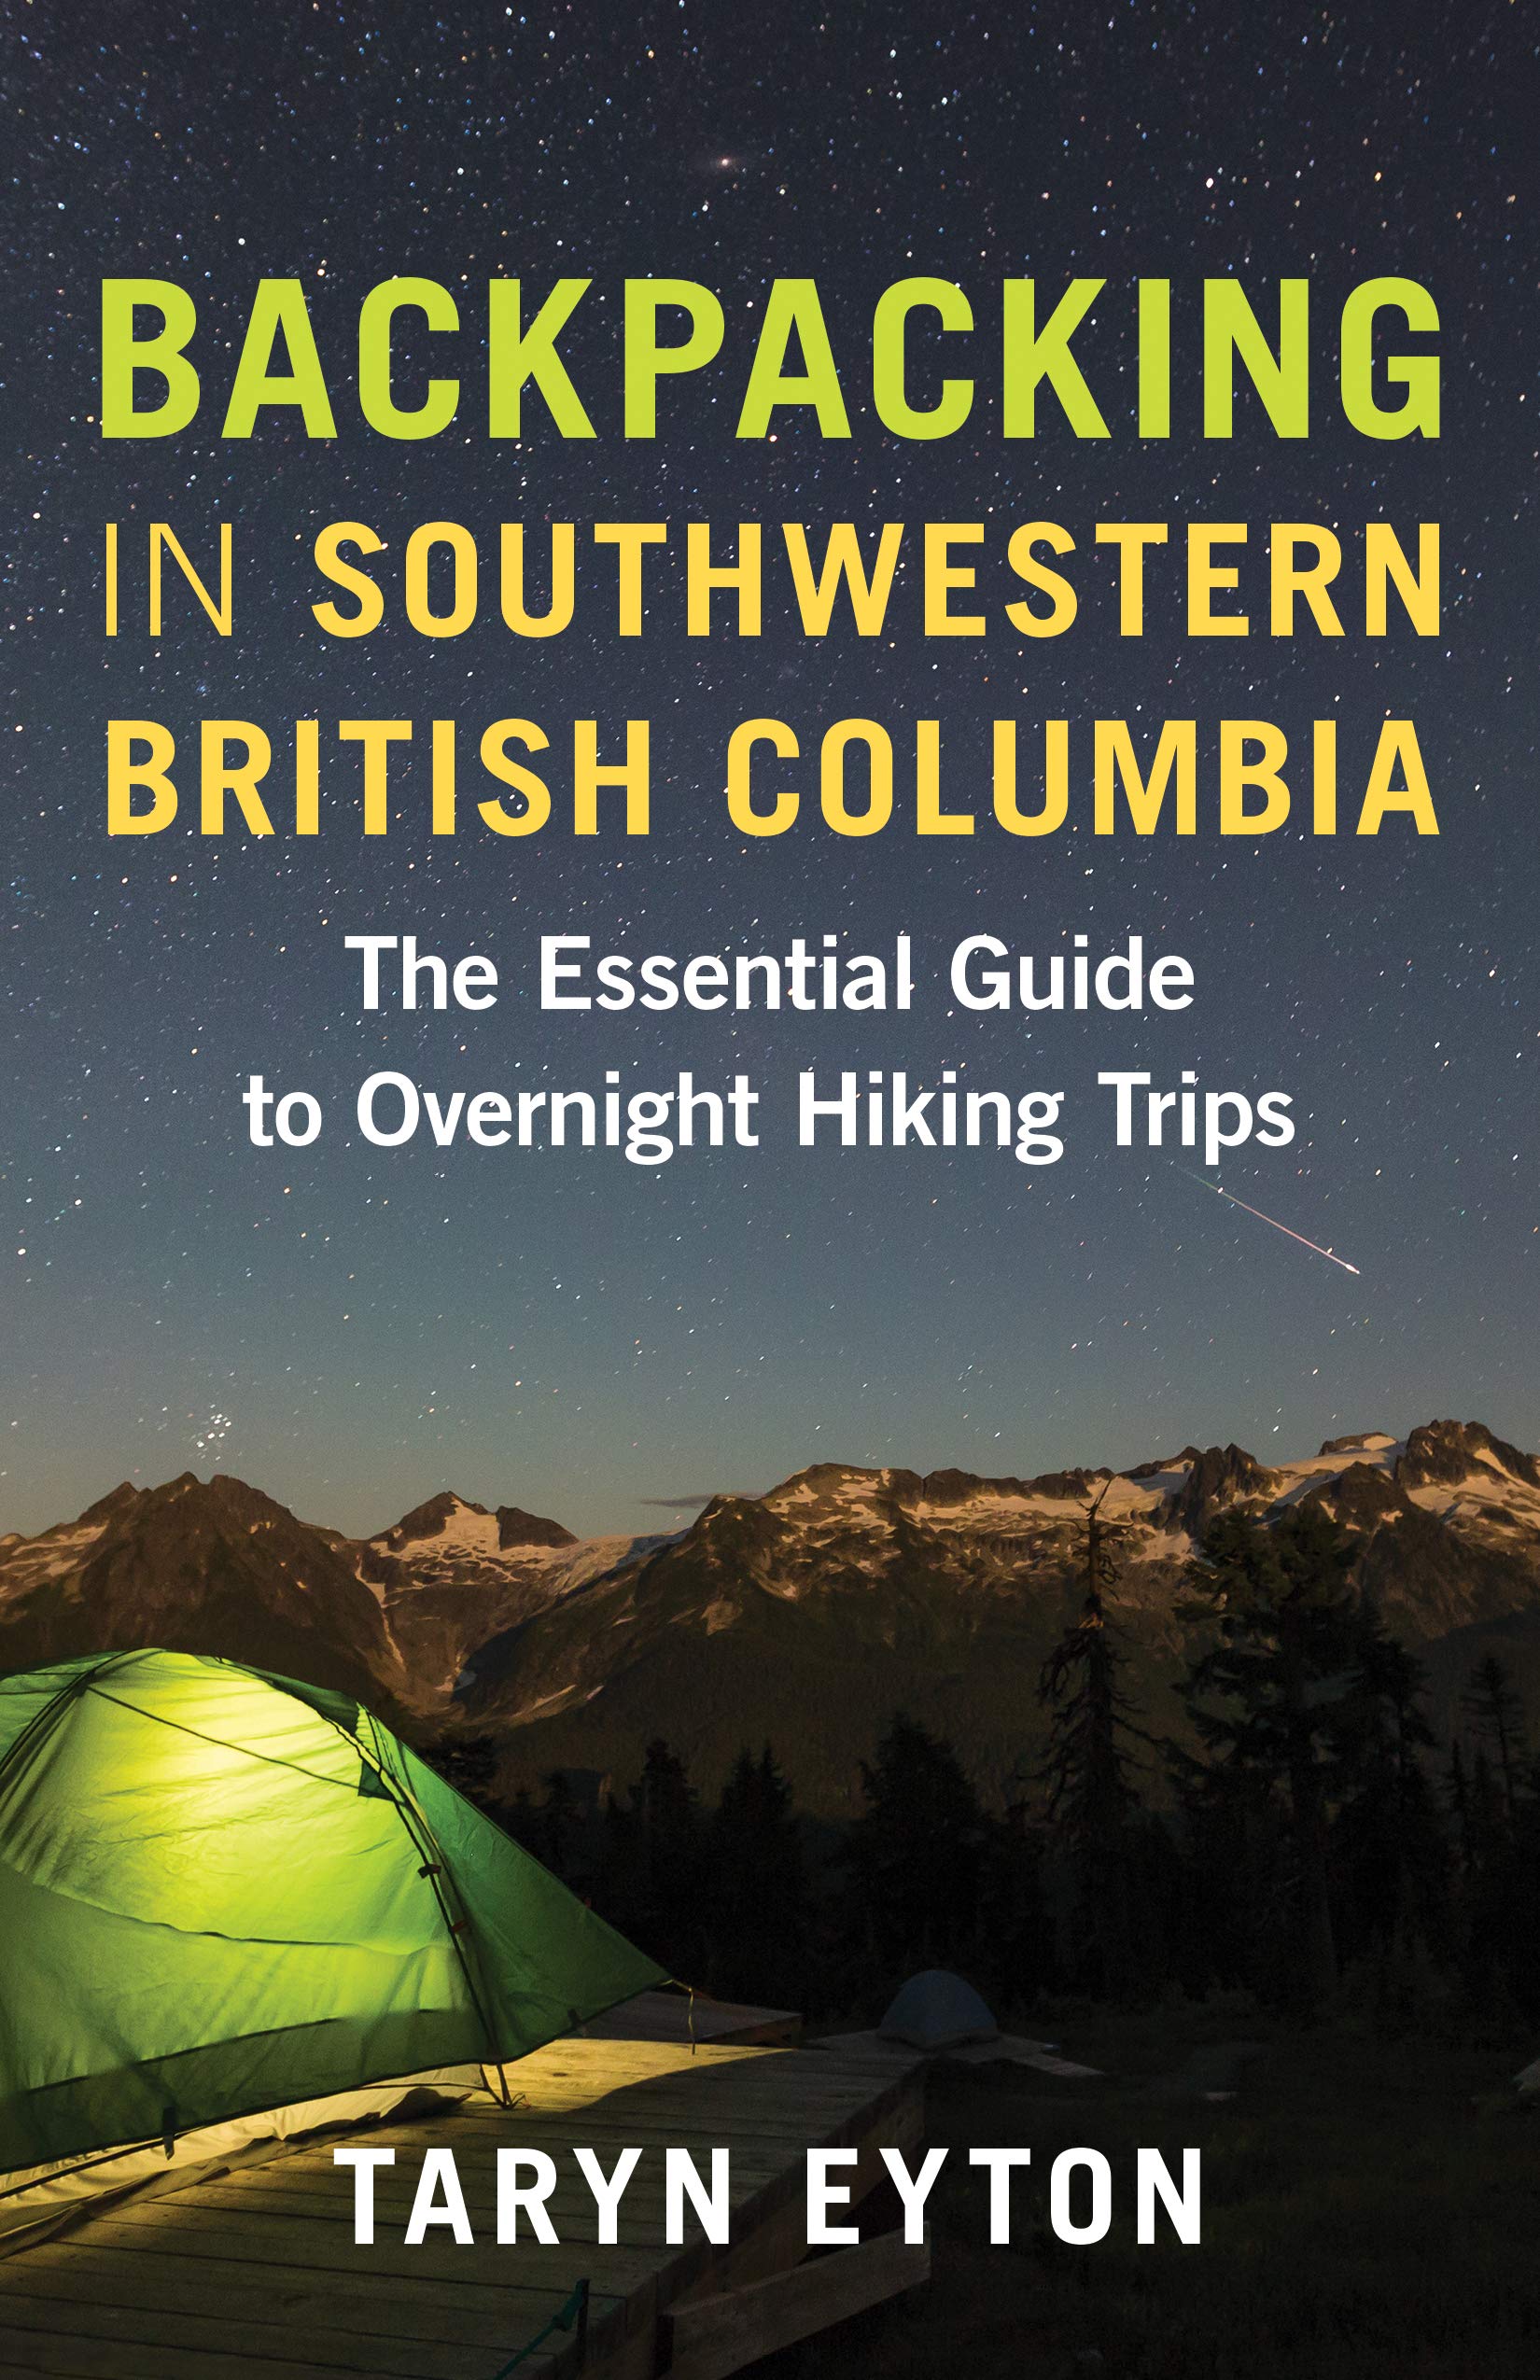 Backpacking in Southwestern British Columbia by Taryn Eyton